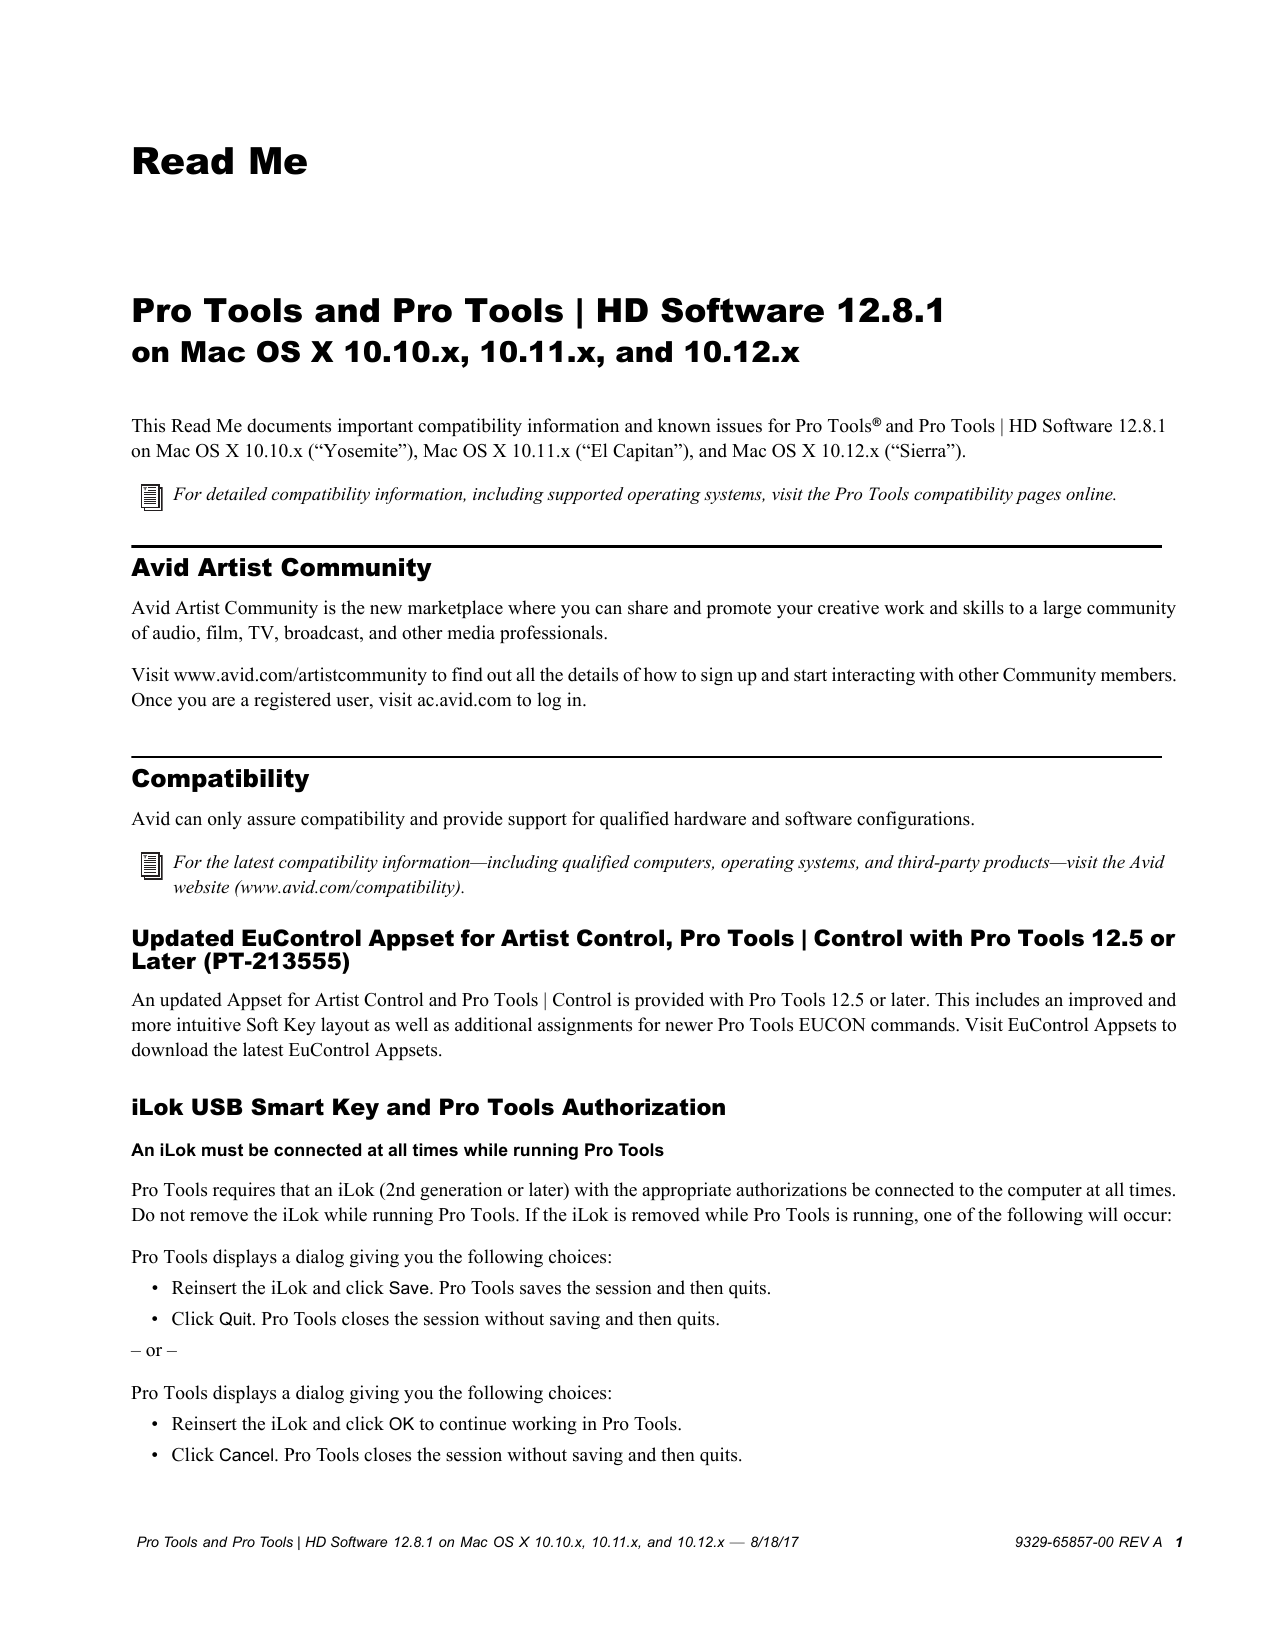 pro tools 10 mac os compatibility